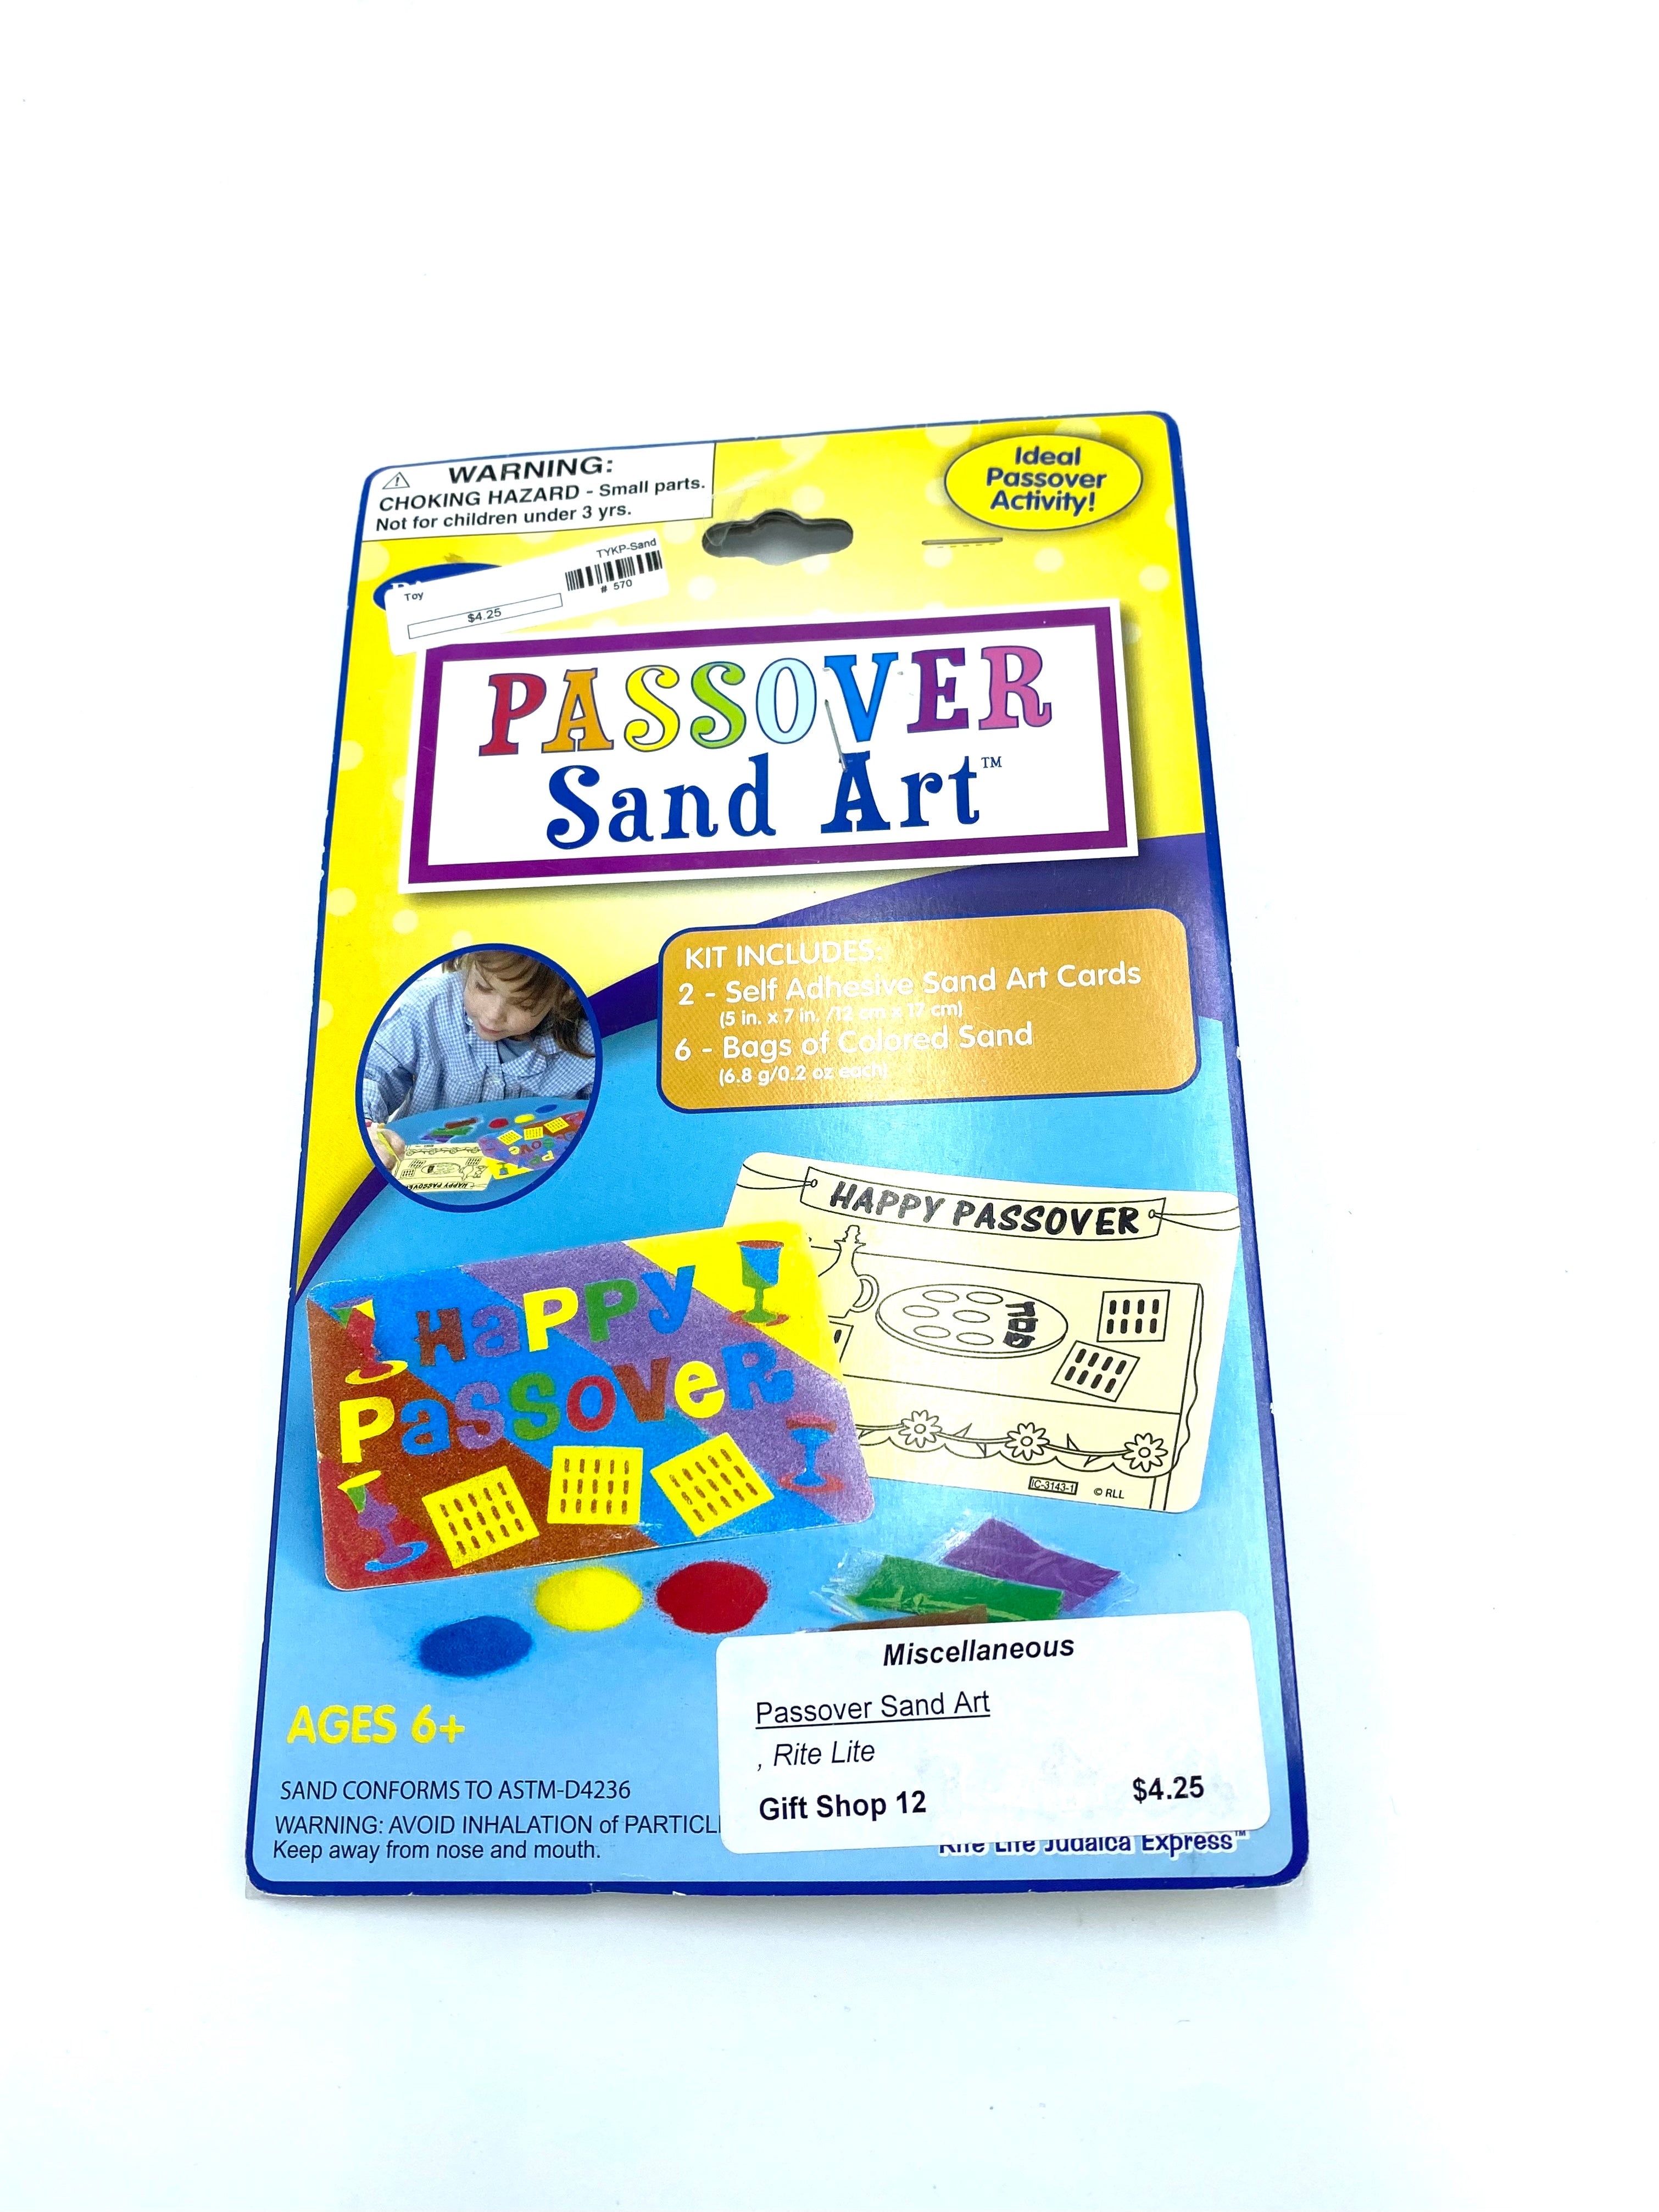 Sand art for Passover